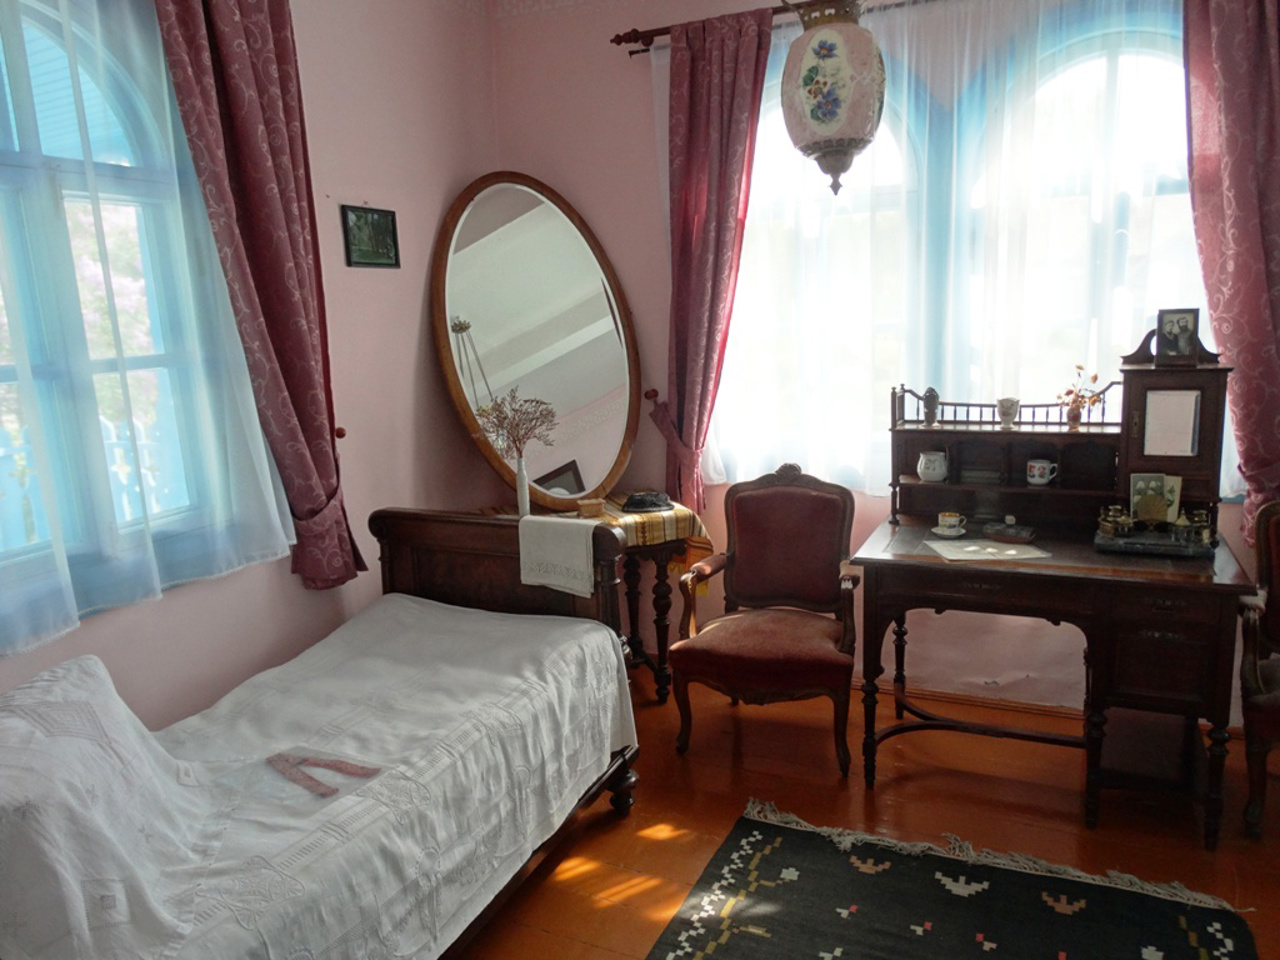 Lesya Ukrayinka Manor-Museum, Kolodiazhne